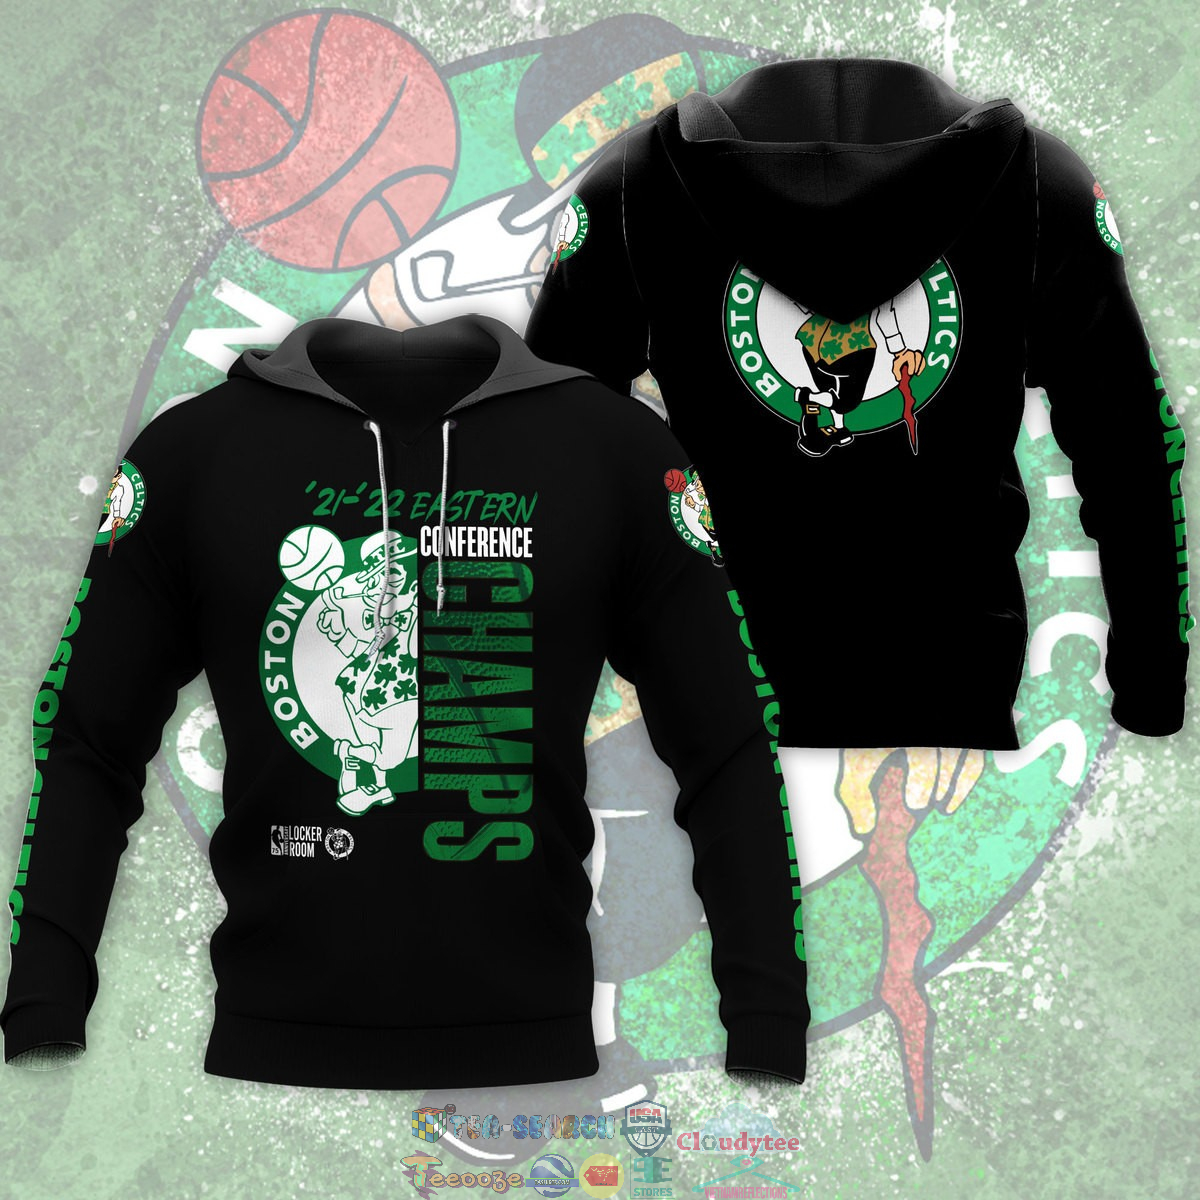 21-22 Eastern Conferrence Champs Boston Celtics Black 3D hoodie and t-shirt – Saleoff